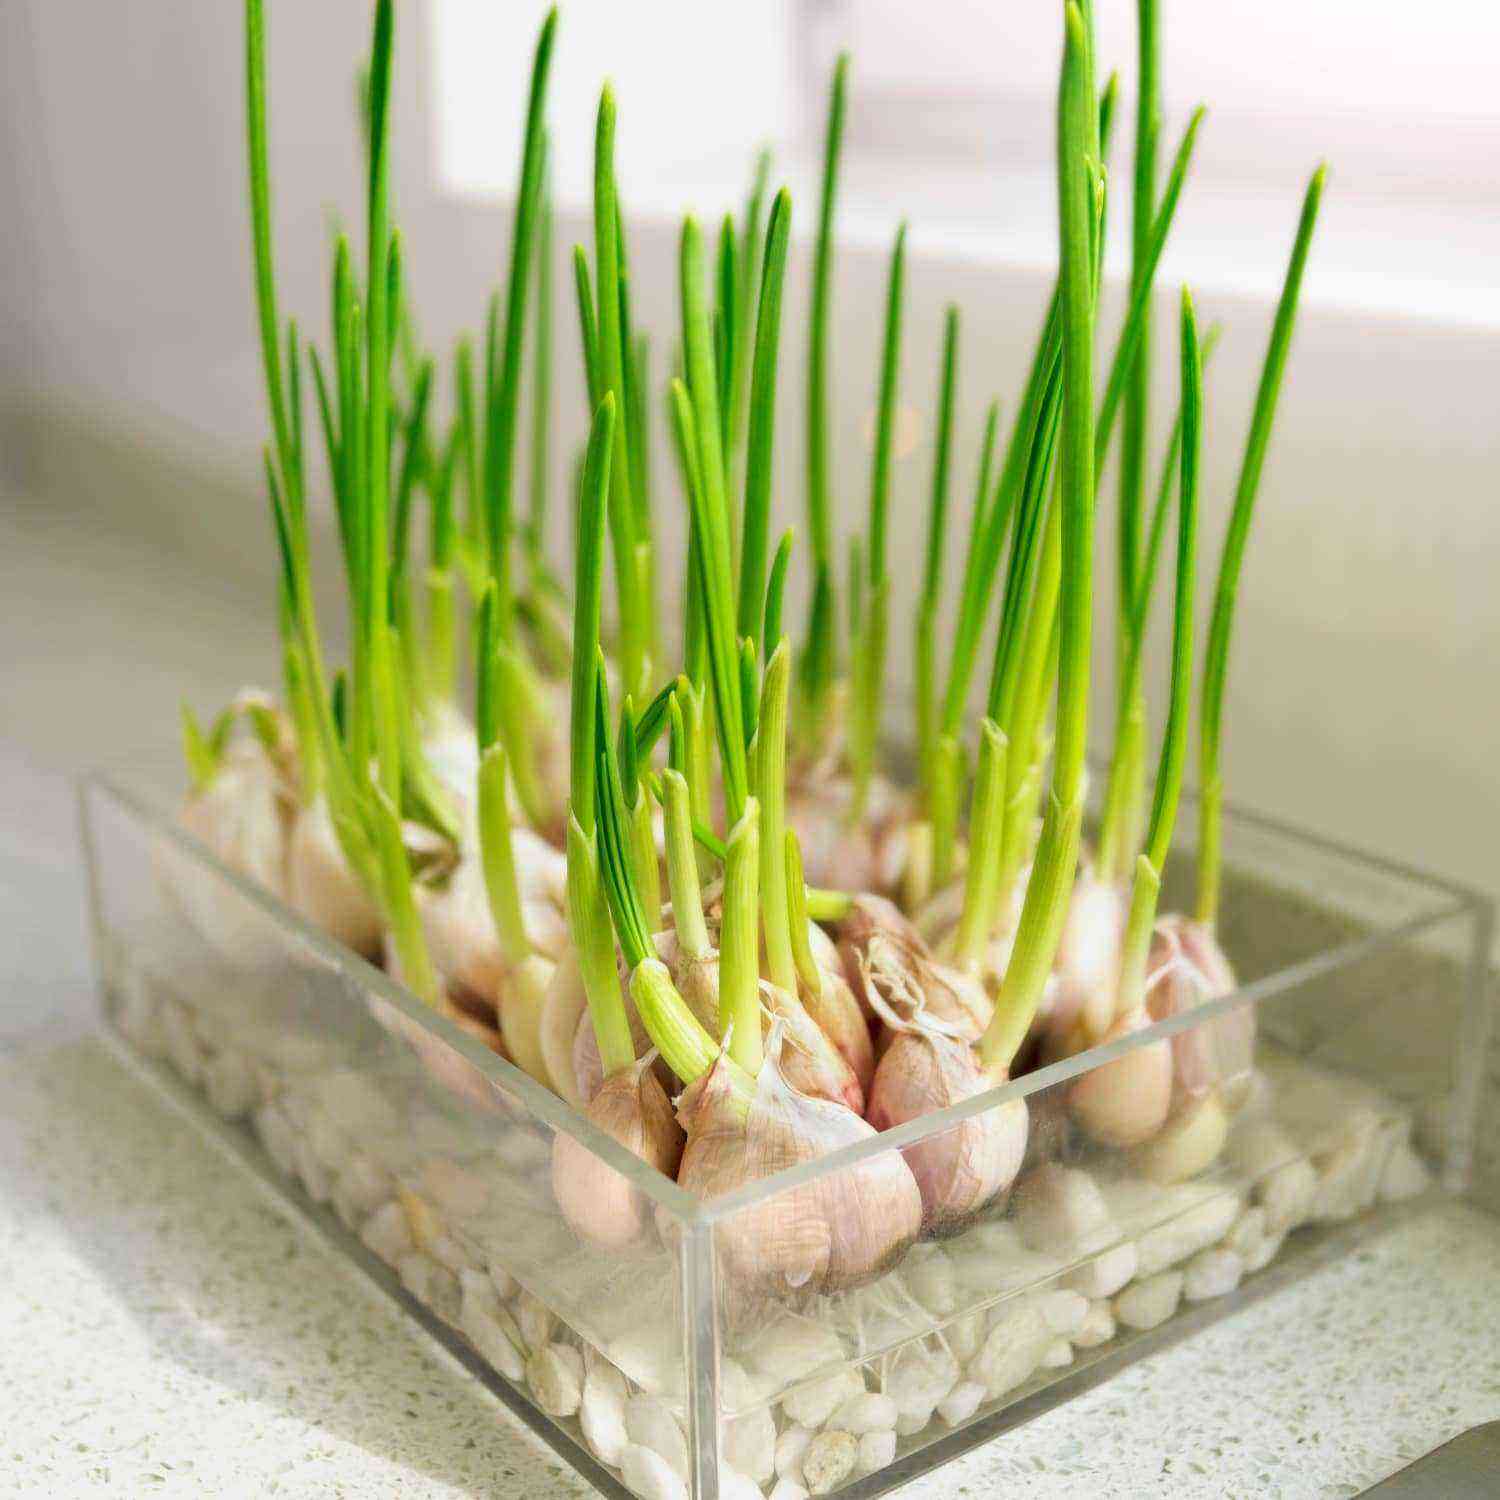 Nuances of growing winter garlic